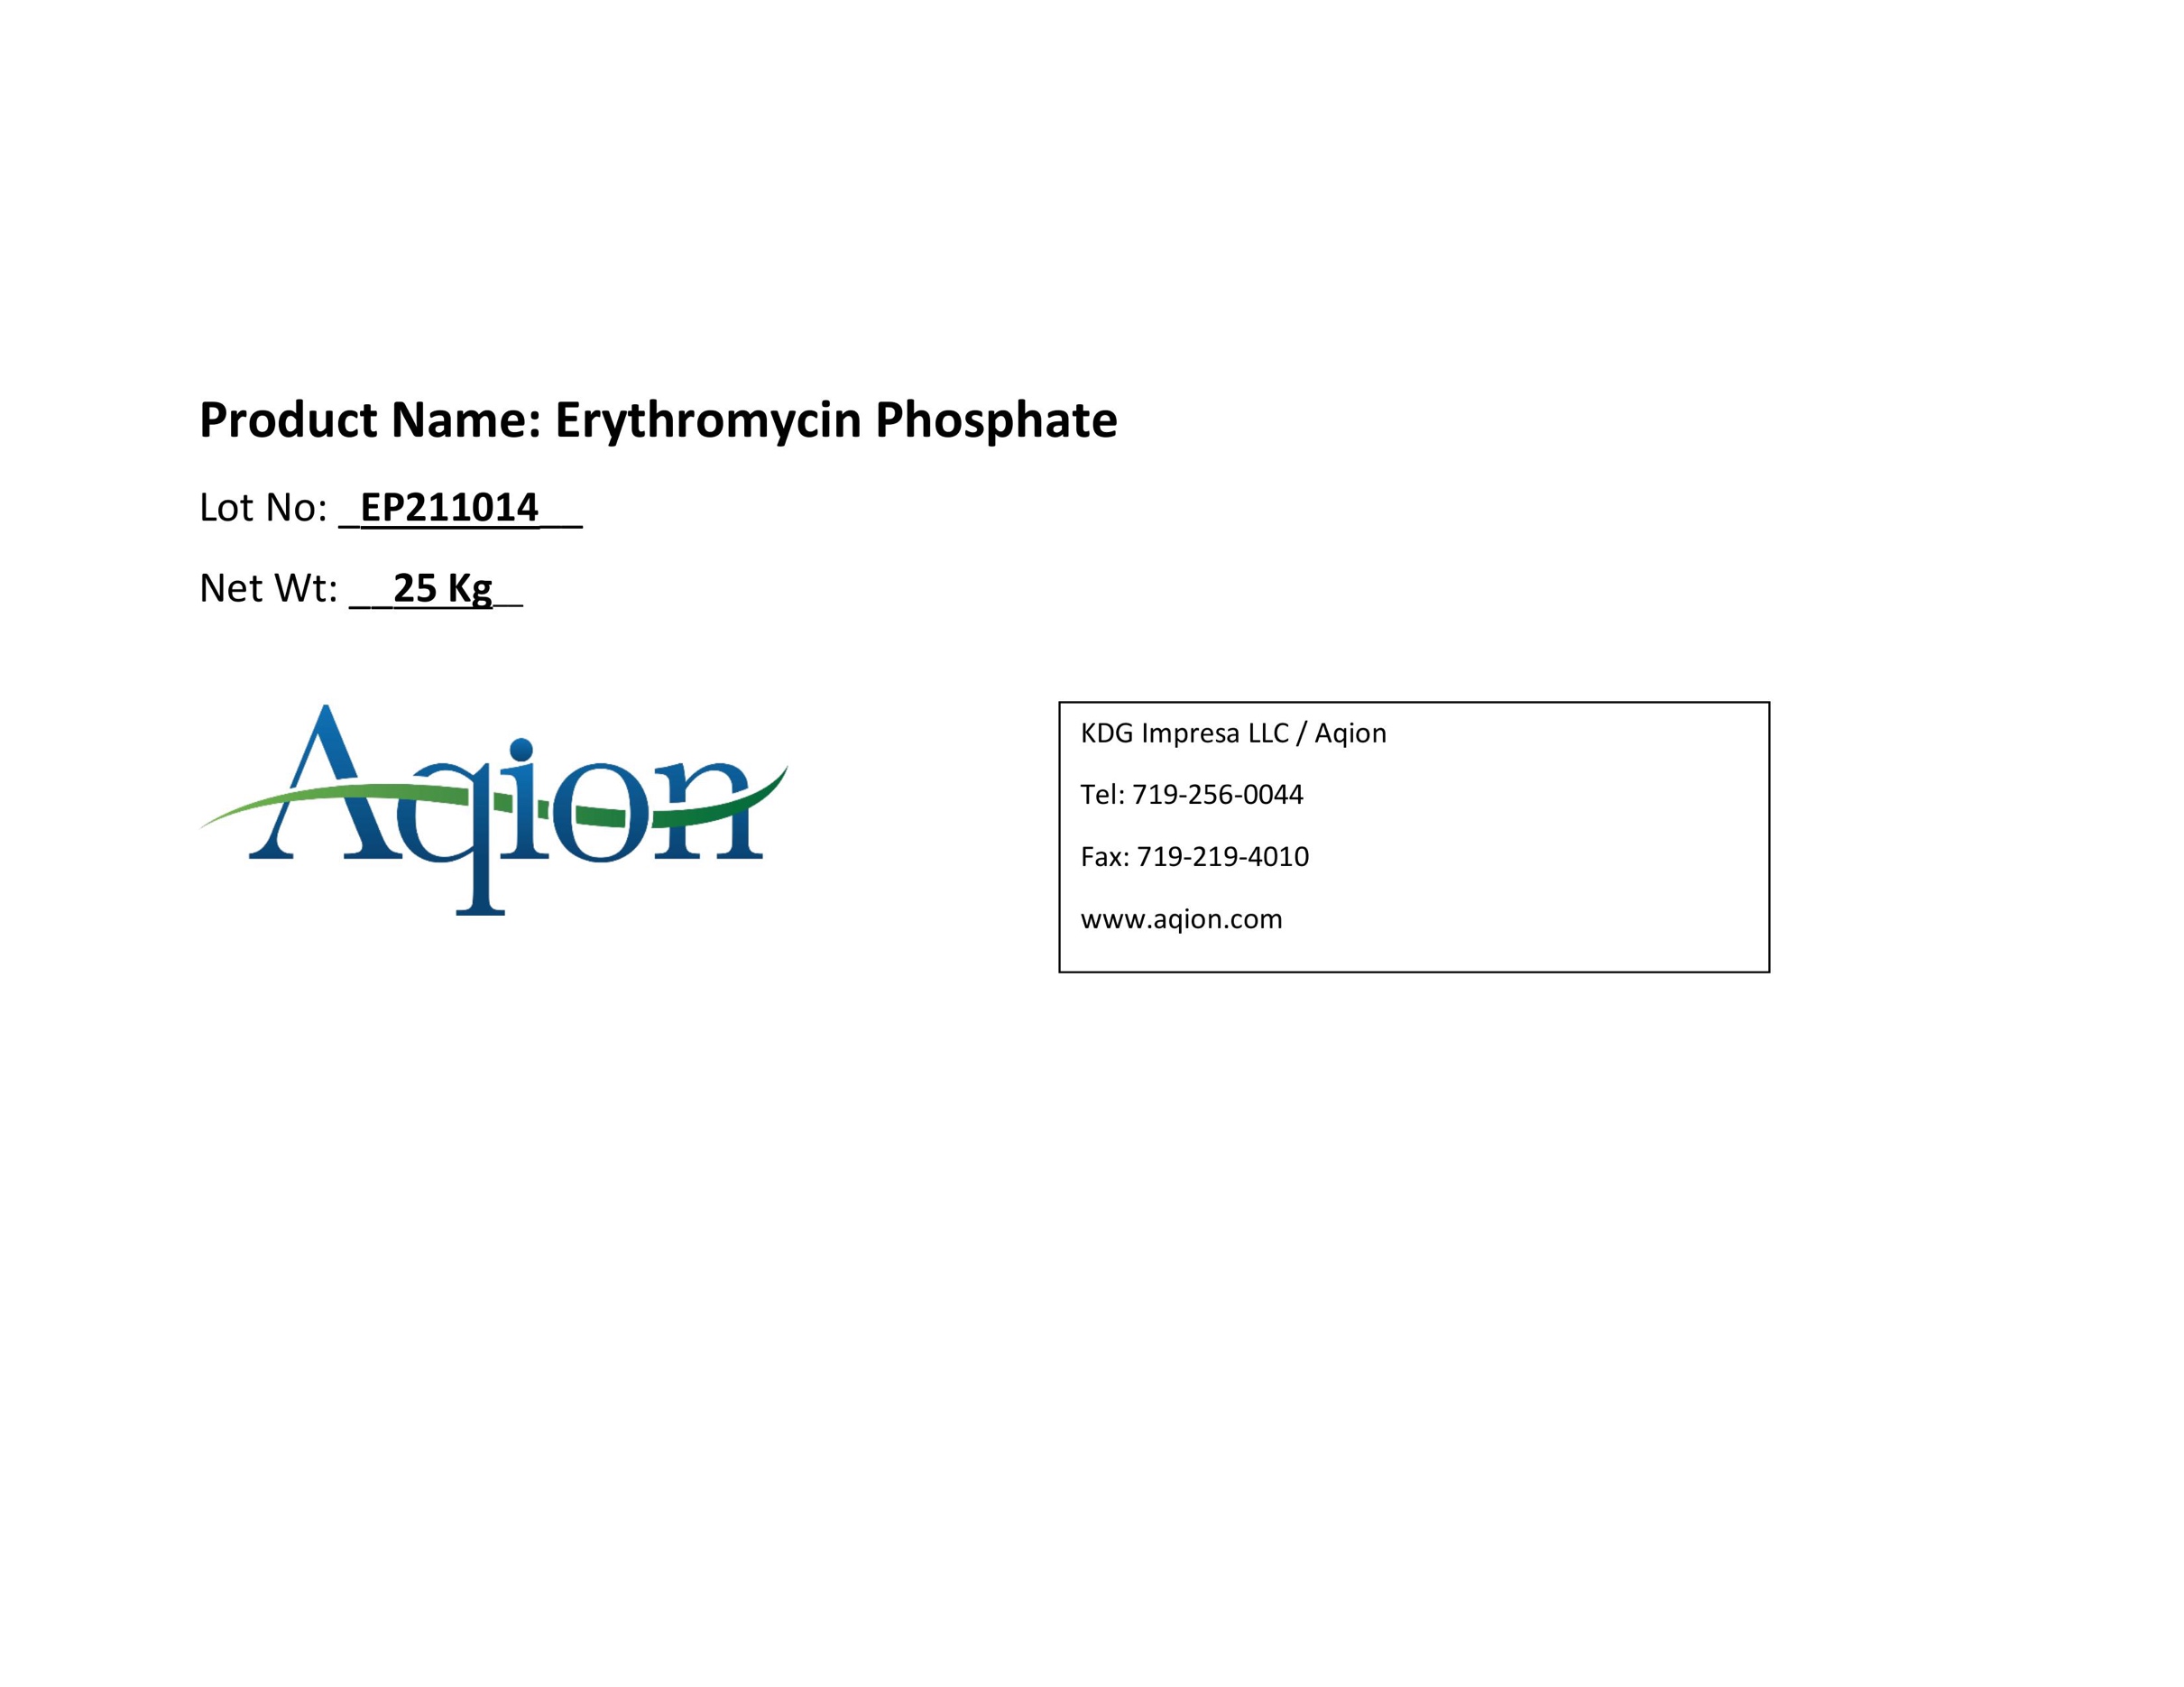 Erythromycin Phosphate bulk label